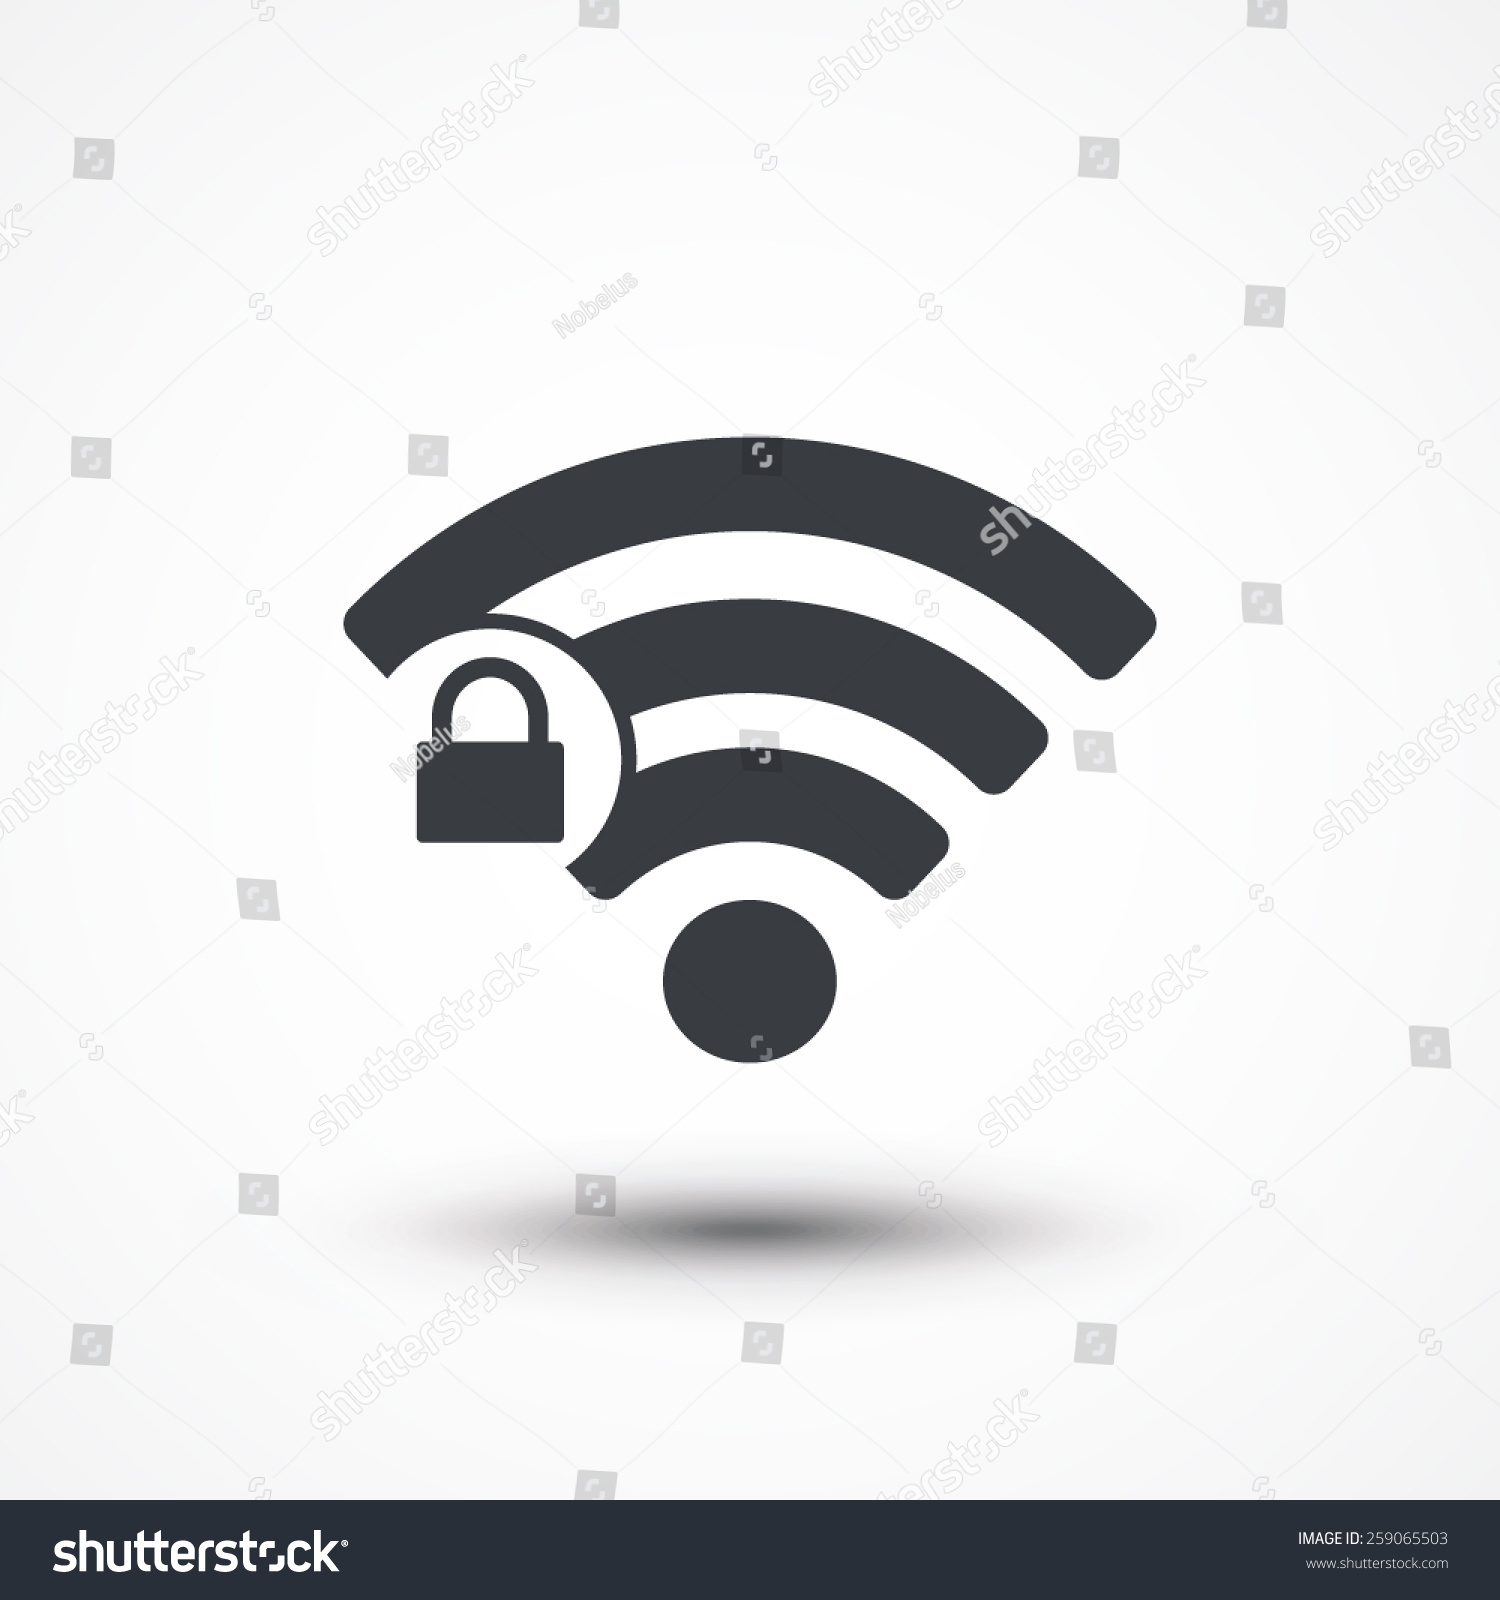 wifi-locked-sign-password-wifi-symbol-stock-vector-259065503-shutterstock